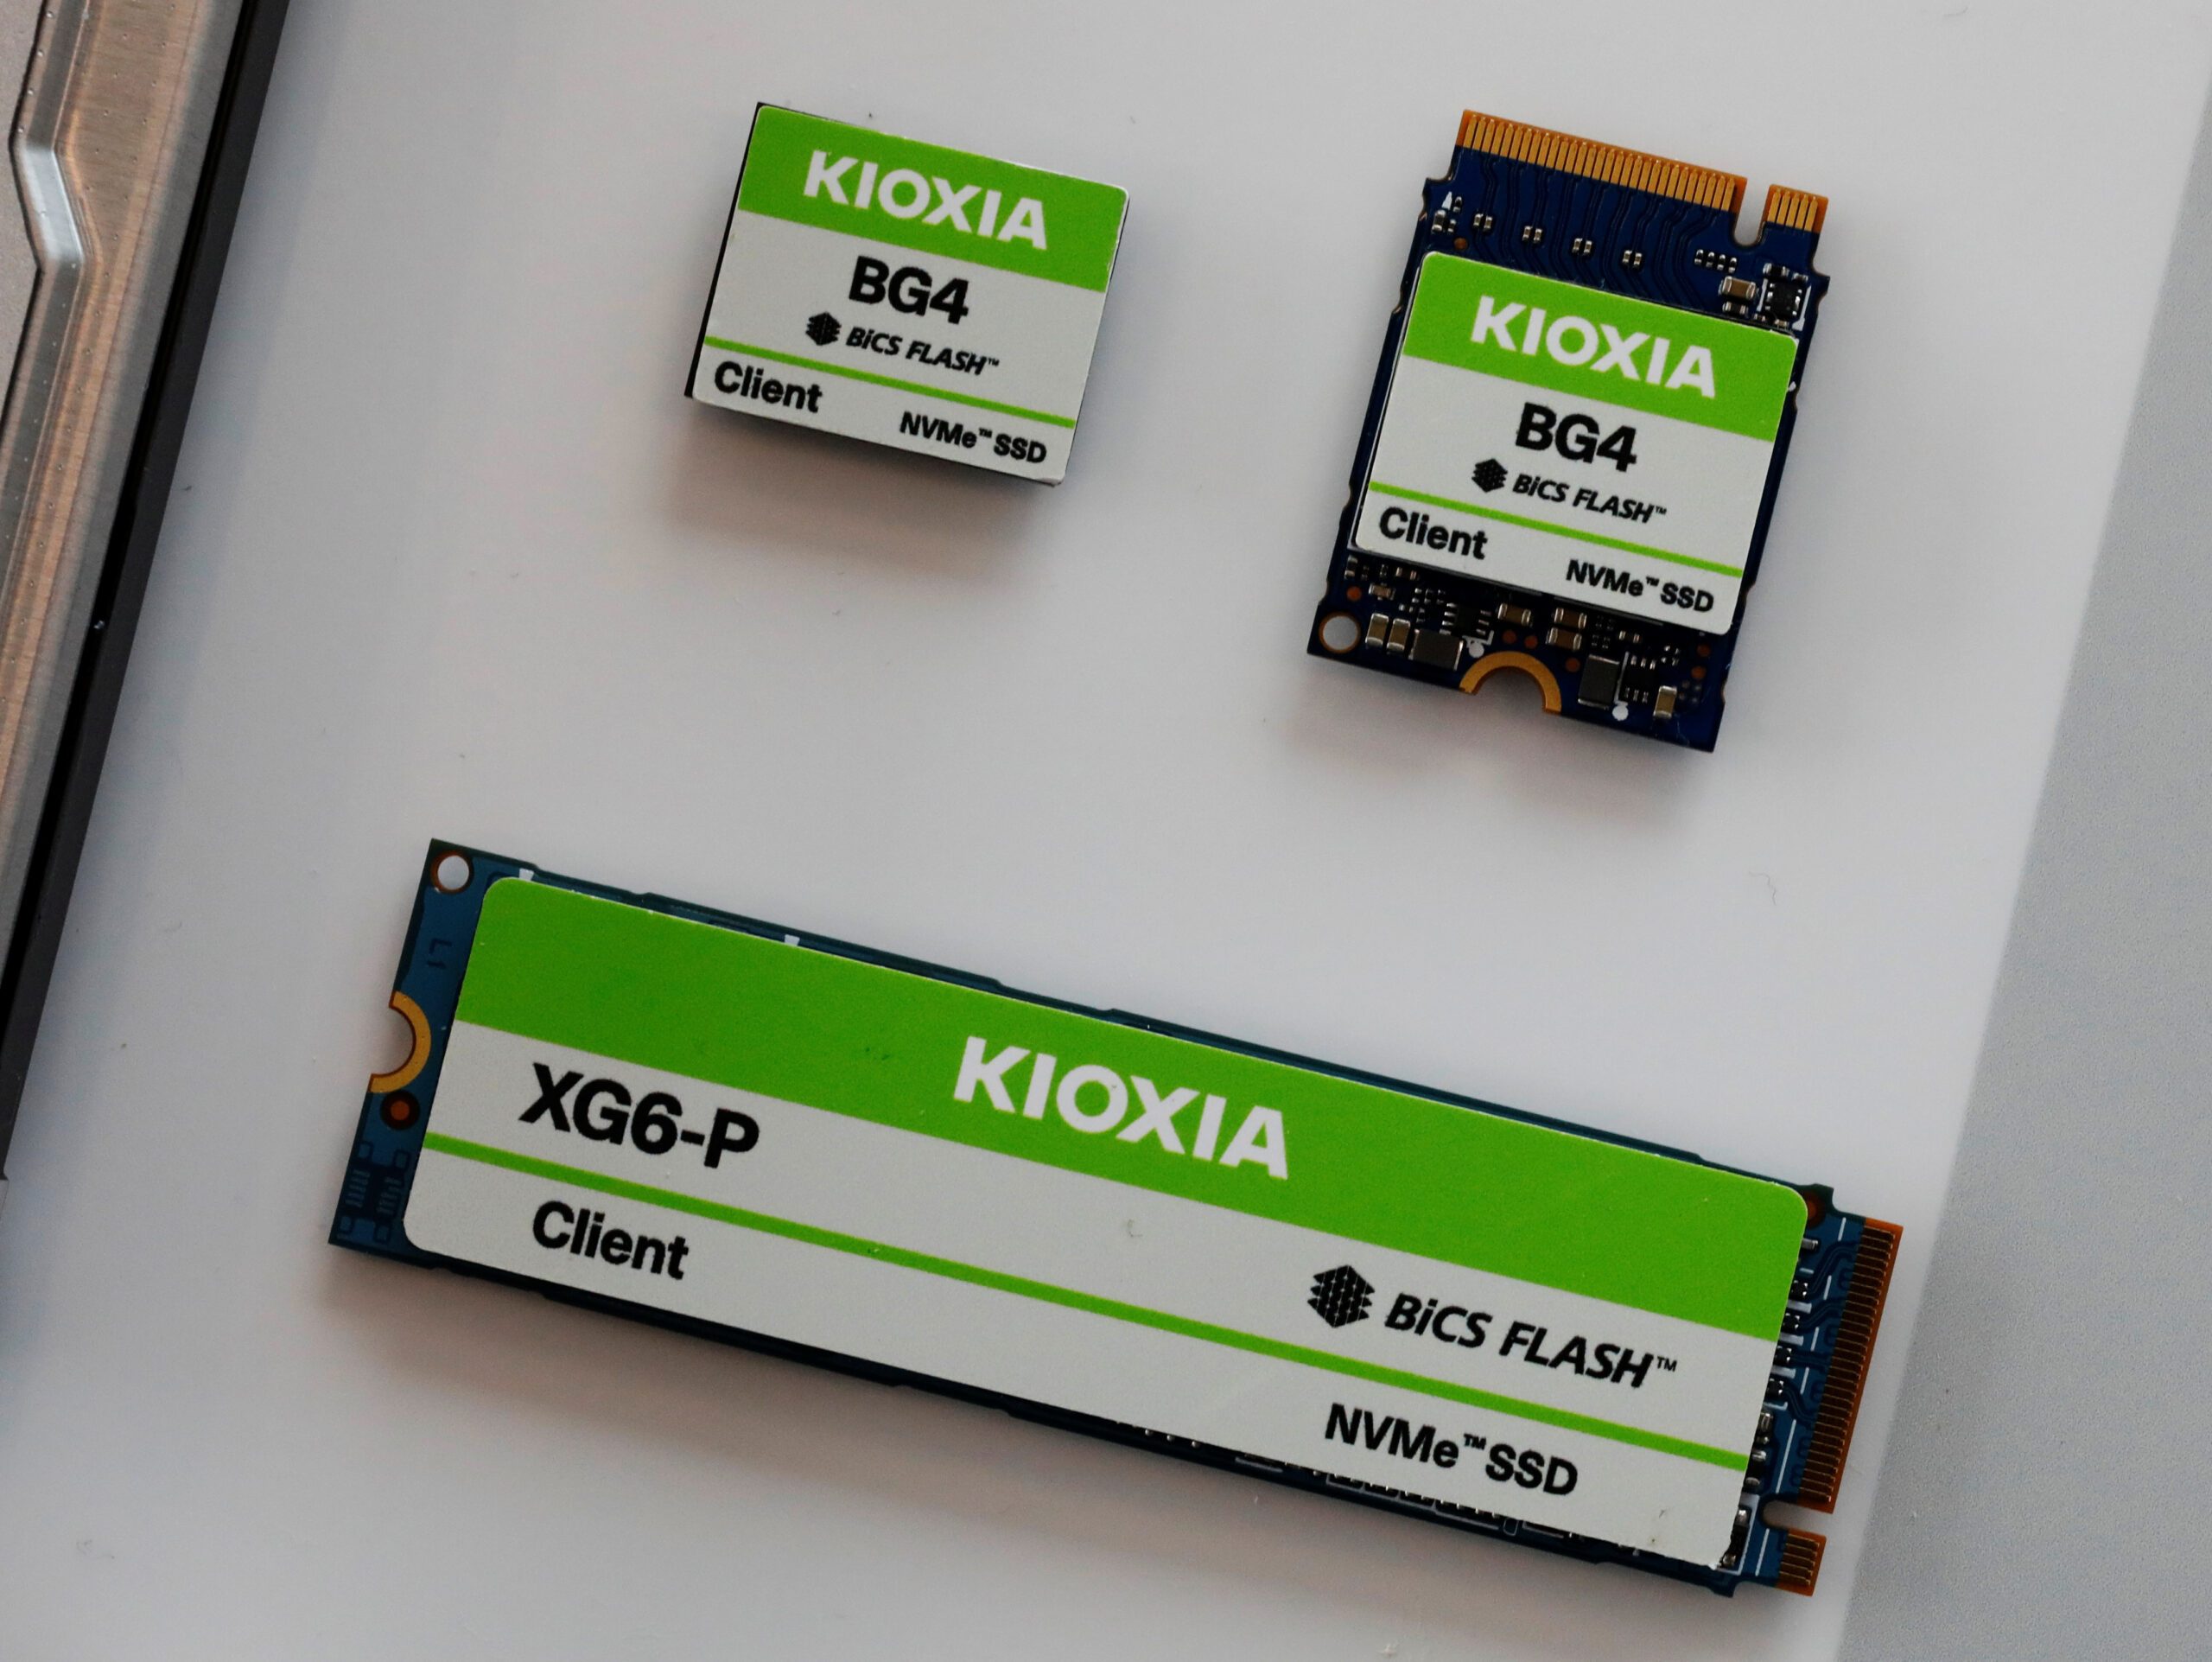 Japanese chipmaker Kioxia said to file preliminary IPO application